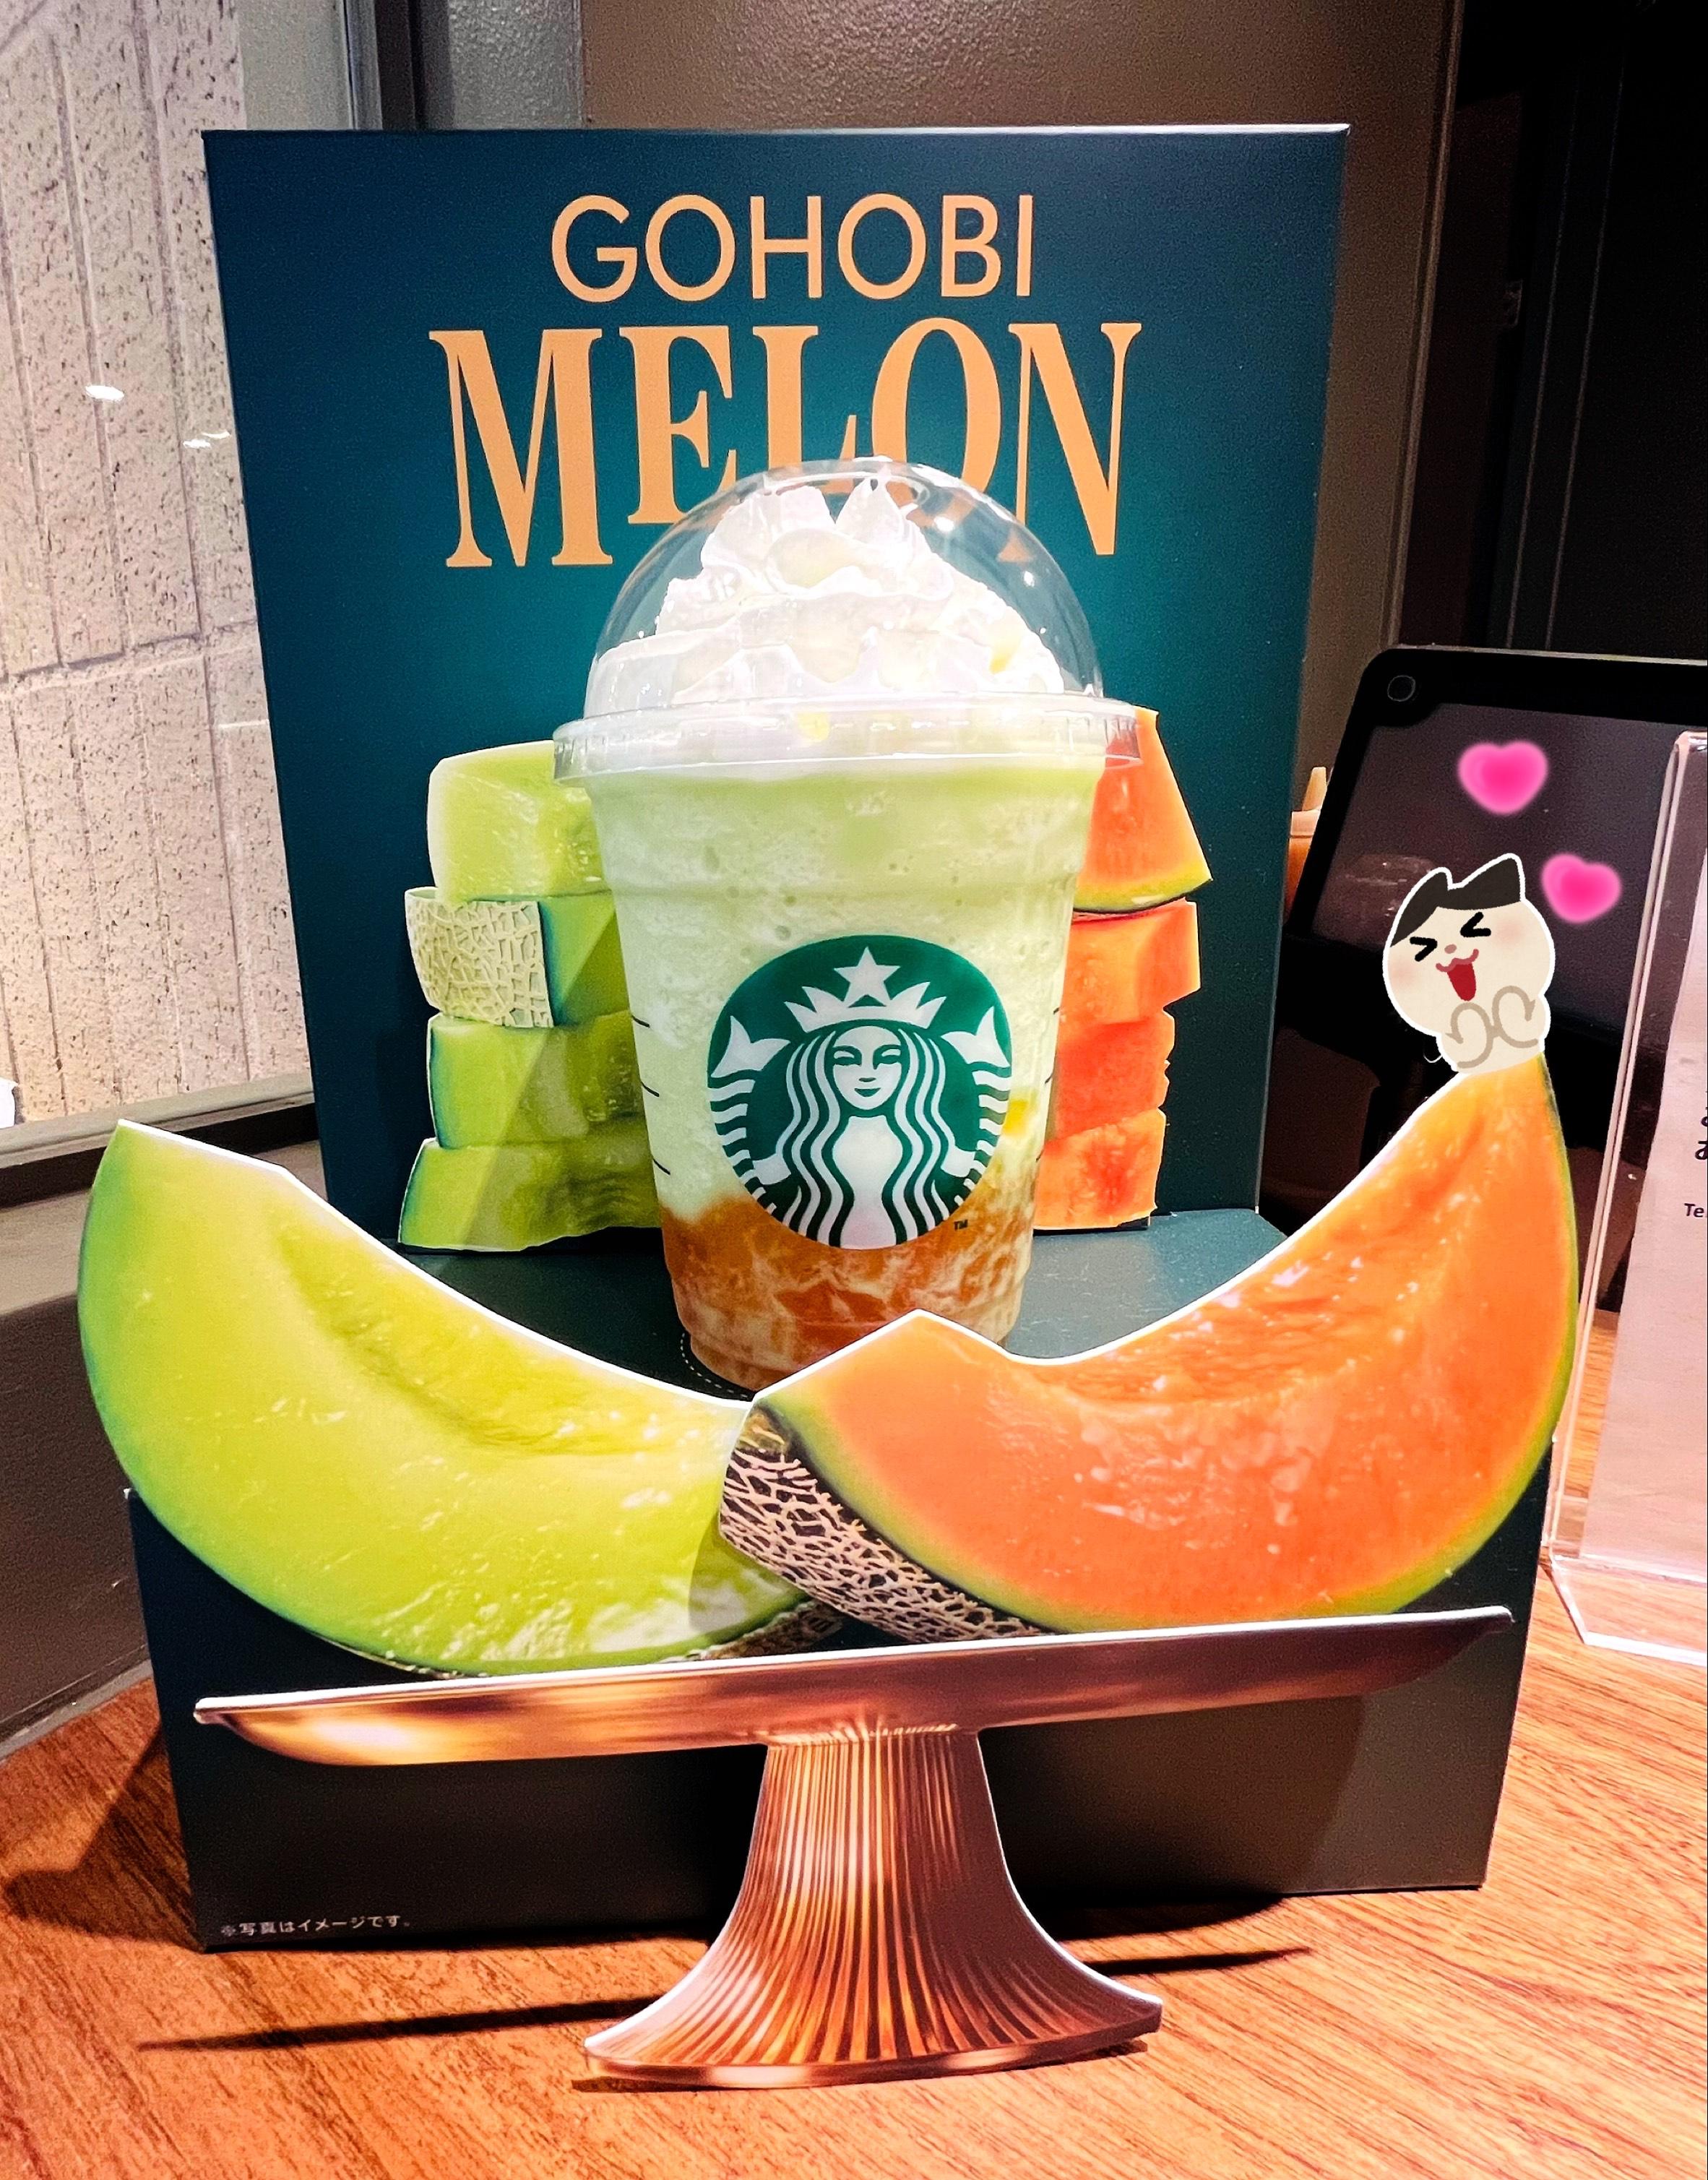 <img class="emojione" alt="🍈" title=":melon:" src="https://fuzoku.jp/assets/img/emojione/1f348.png"/>